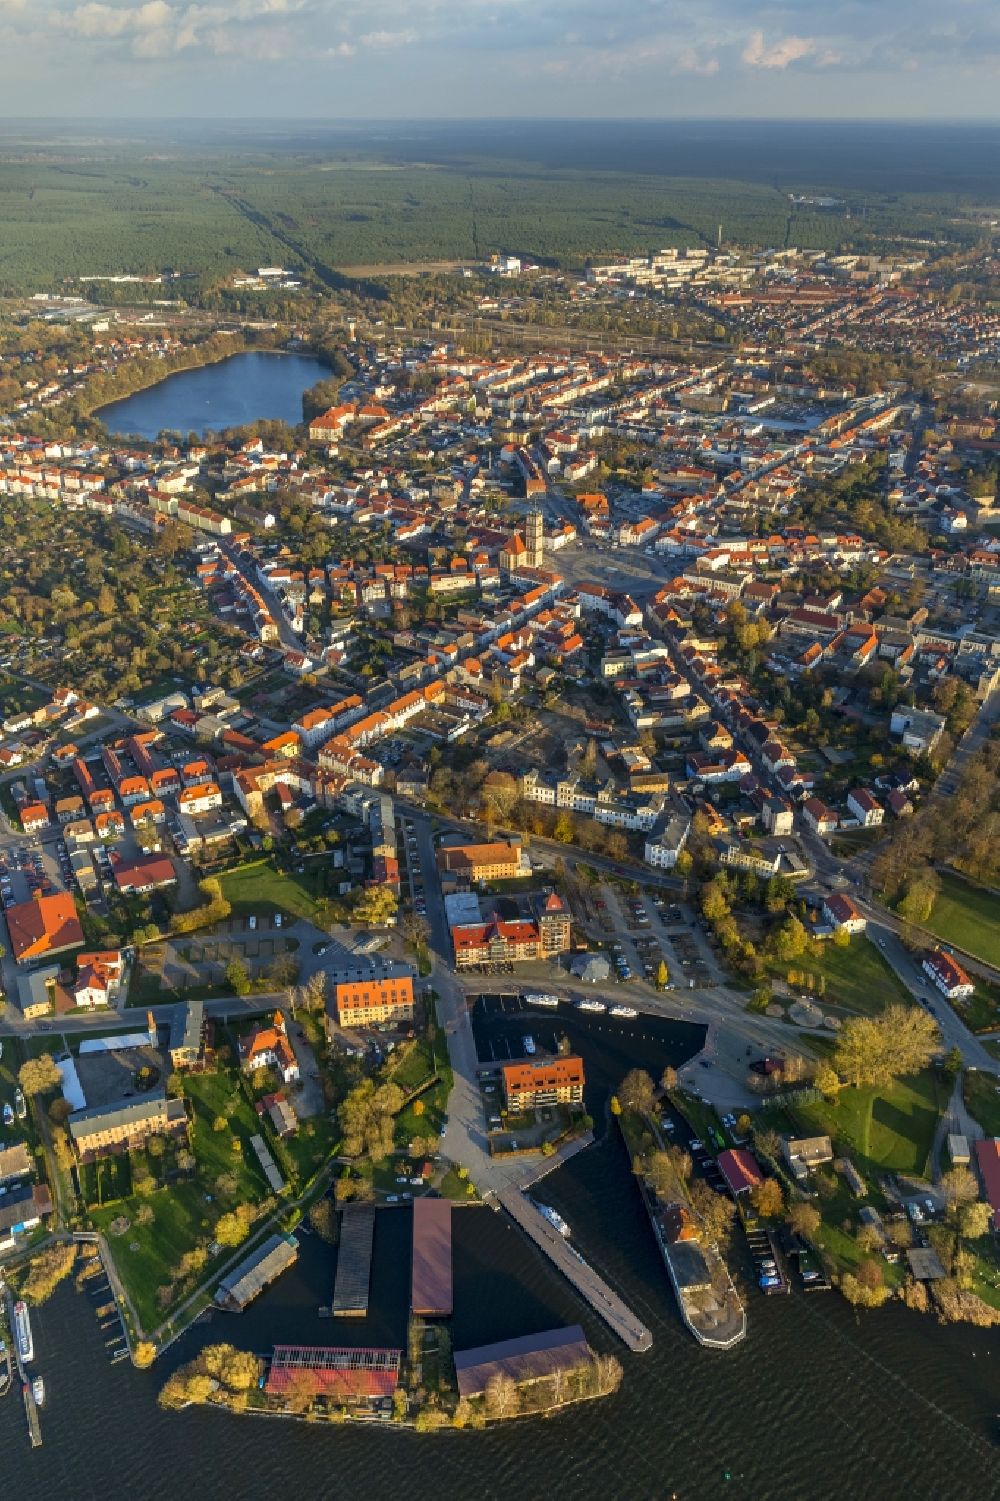 Neustrelitz from the bird's eye view: Cityscape of downtown area at the market square in Neustrelitz in Mecklenburg - Western Pomerania